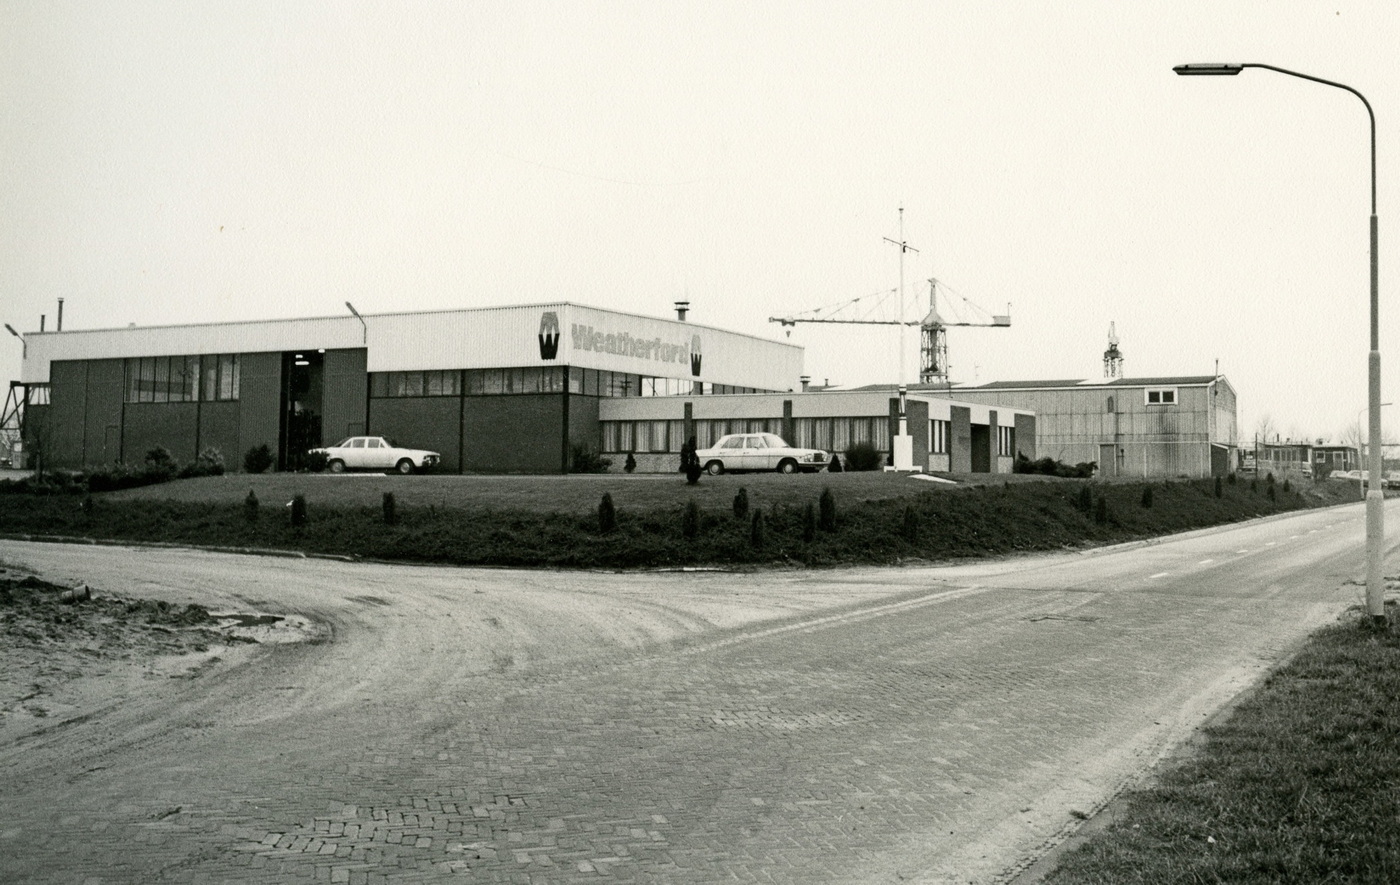 Wheaterford en scheepswerf Veldhuis aan de Klaas Woltjerweg te Zuidbroek. Foto: M.A. Douma, 1974. Bron: RHC GA, Groninger Archieven, Beeldbank Groningen.